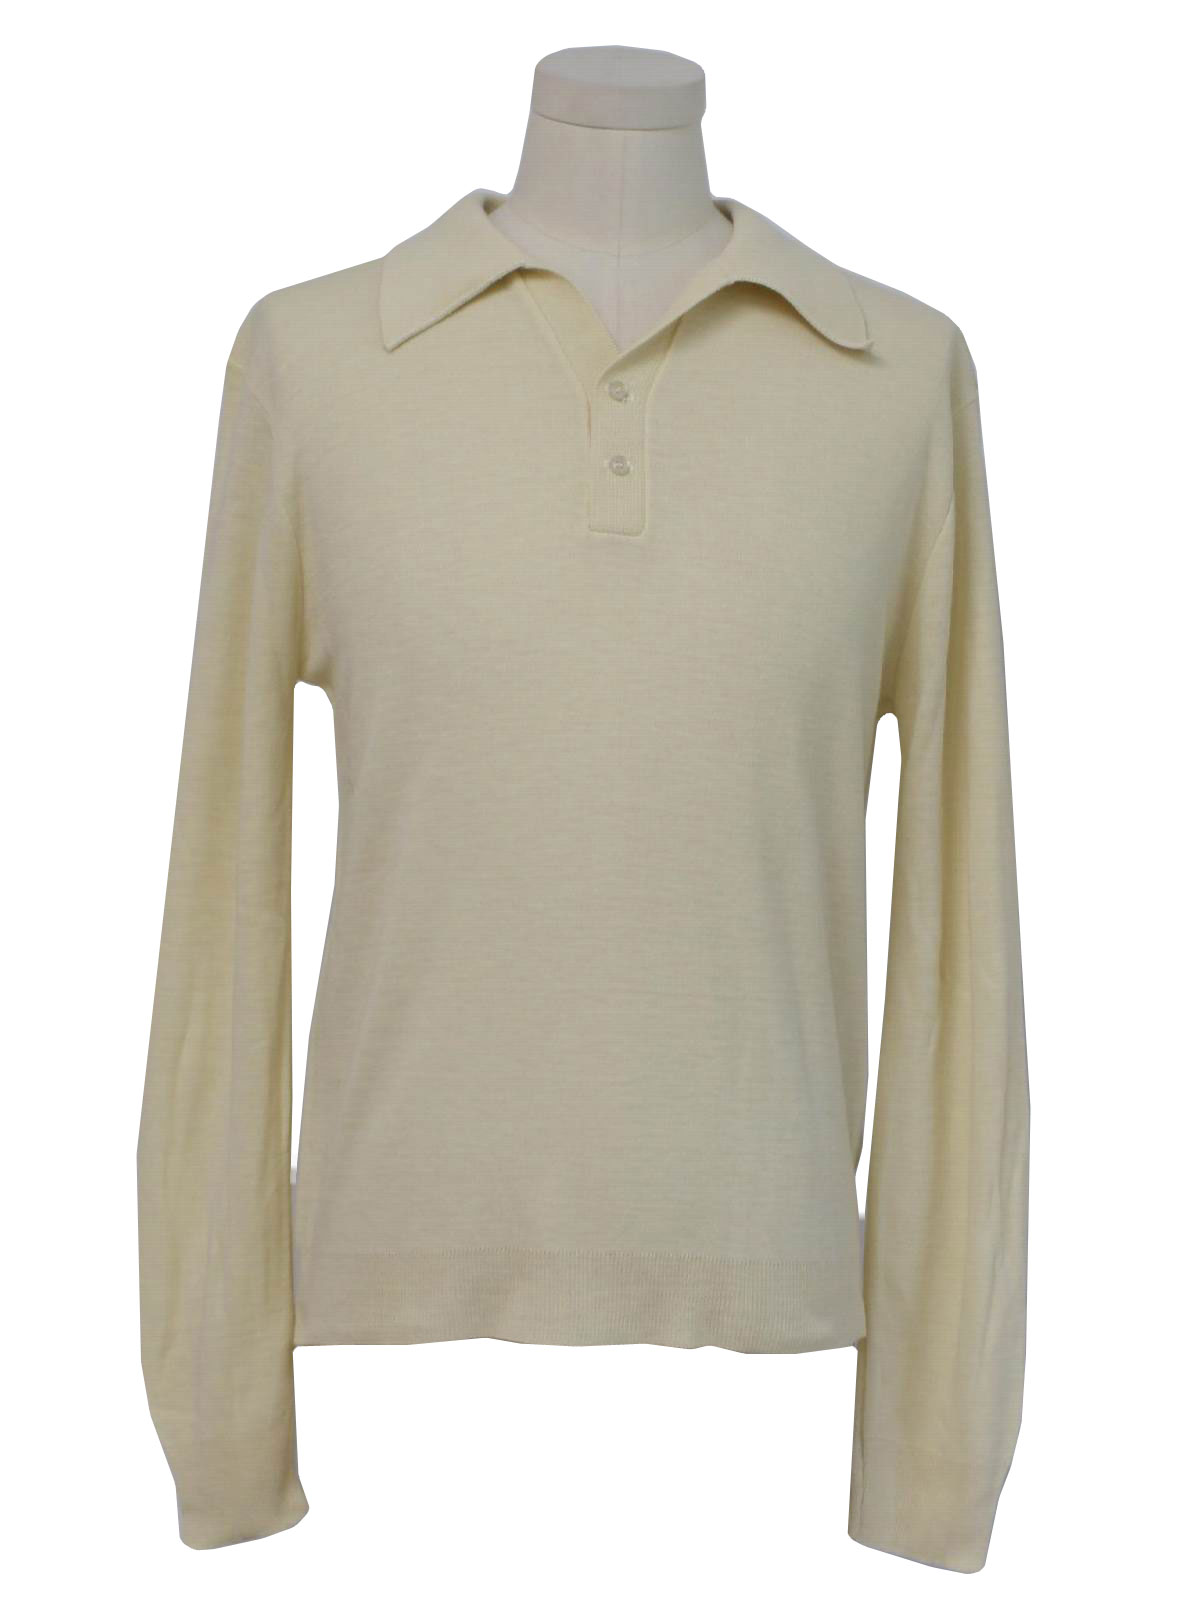 Vintage JC Penney Seventies Knit Shirt: 70s -JC Penney- Mens cream soft ...